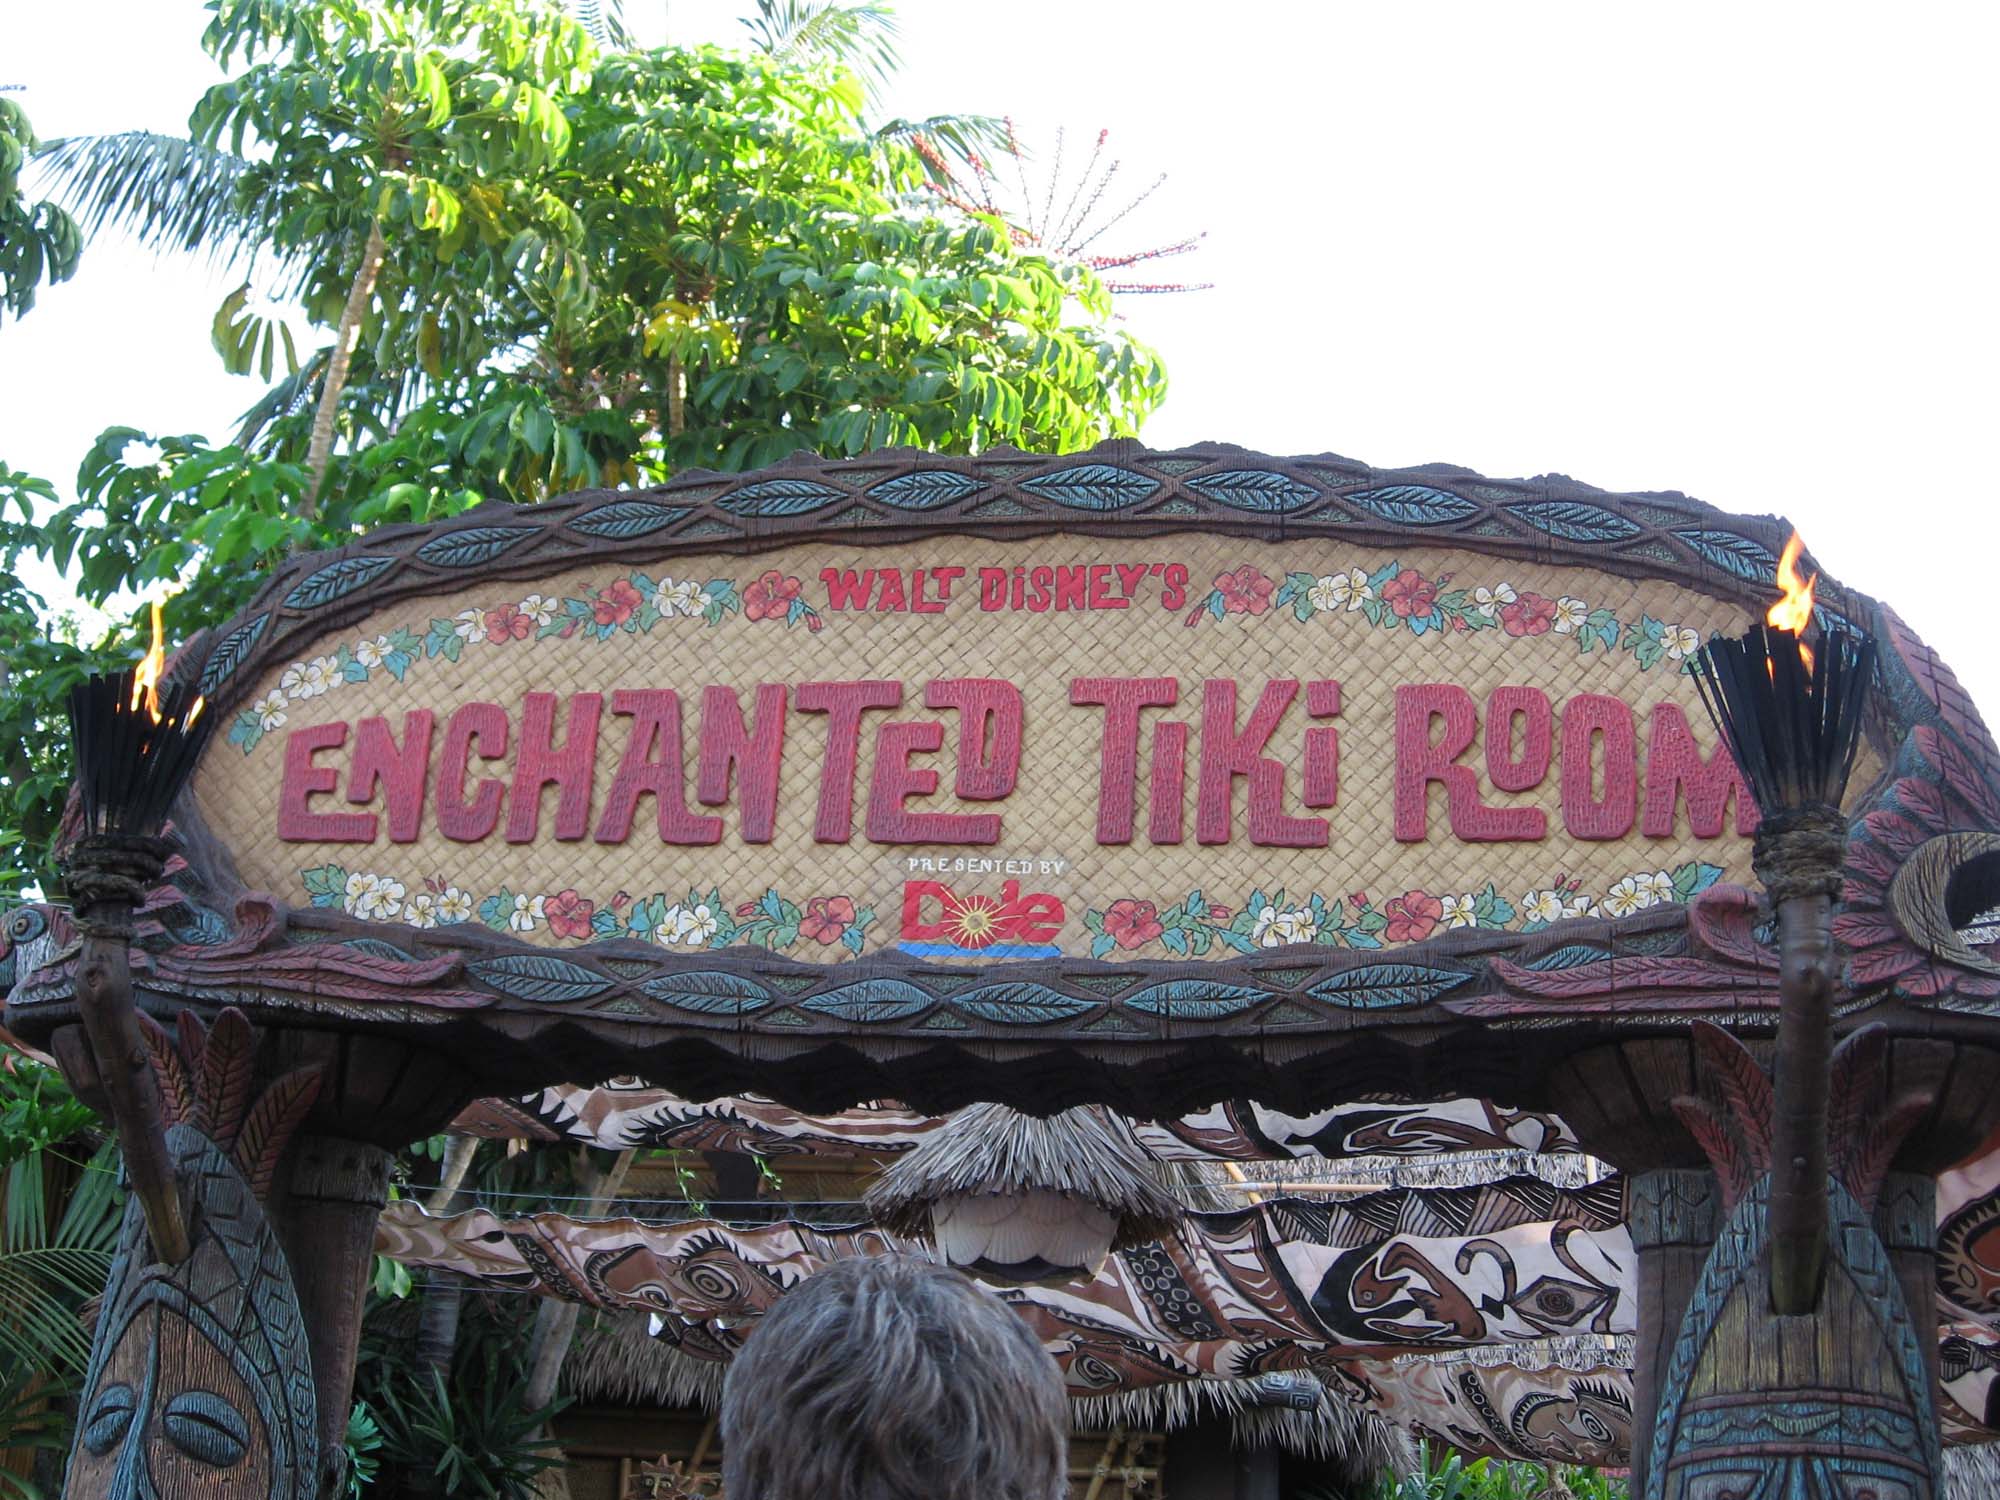 Disneyland - Enchanted Tiki Room in Adventureland